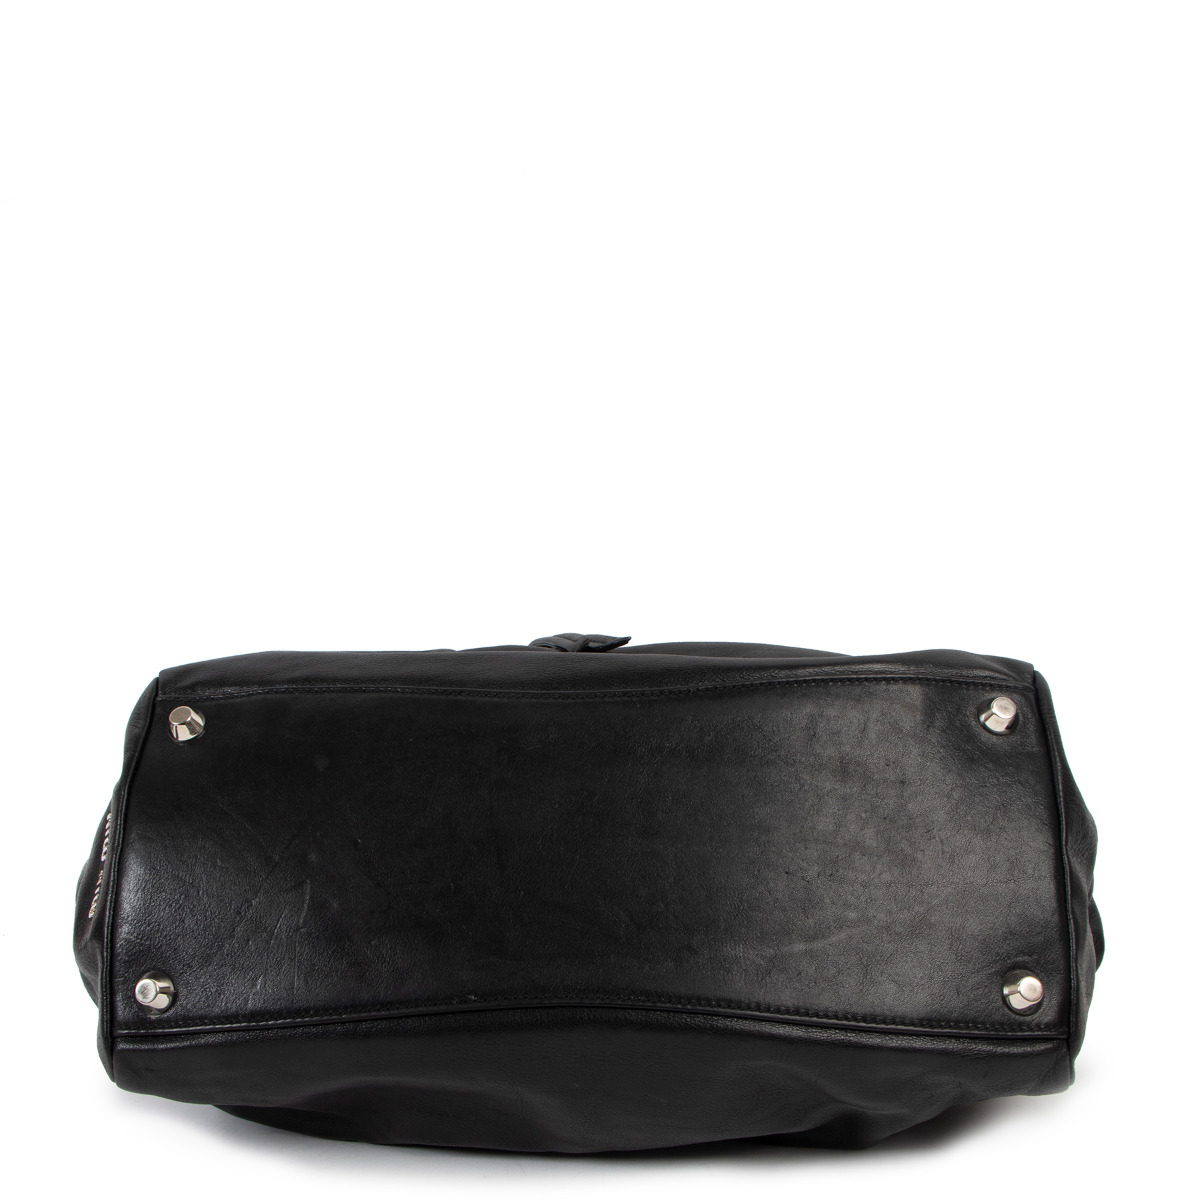 Bow bag leather handbag Miu Miu Black in Leather - 30998485